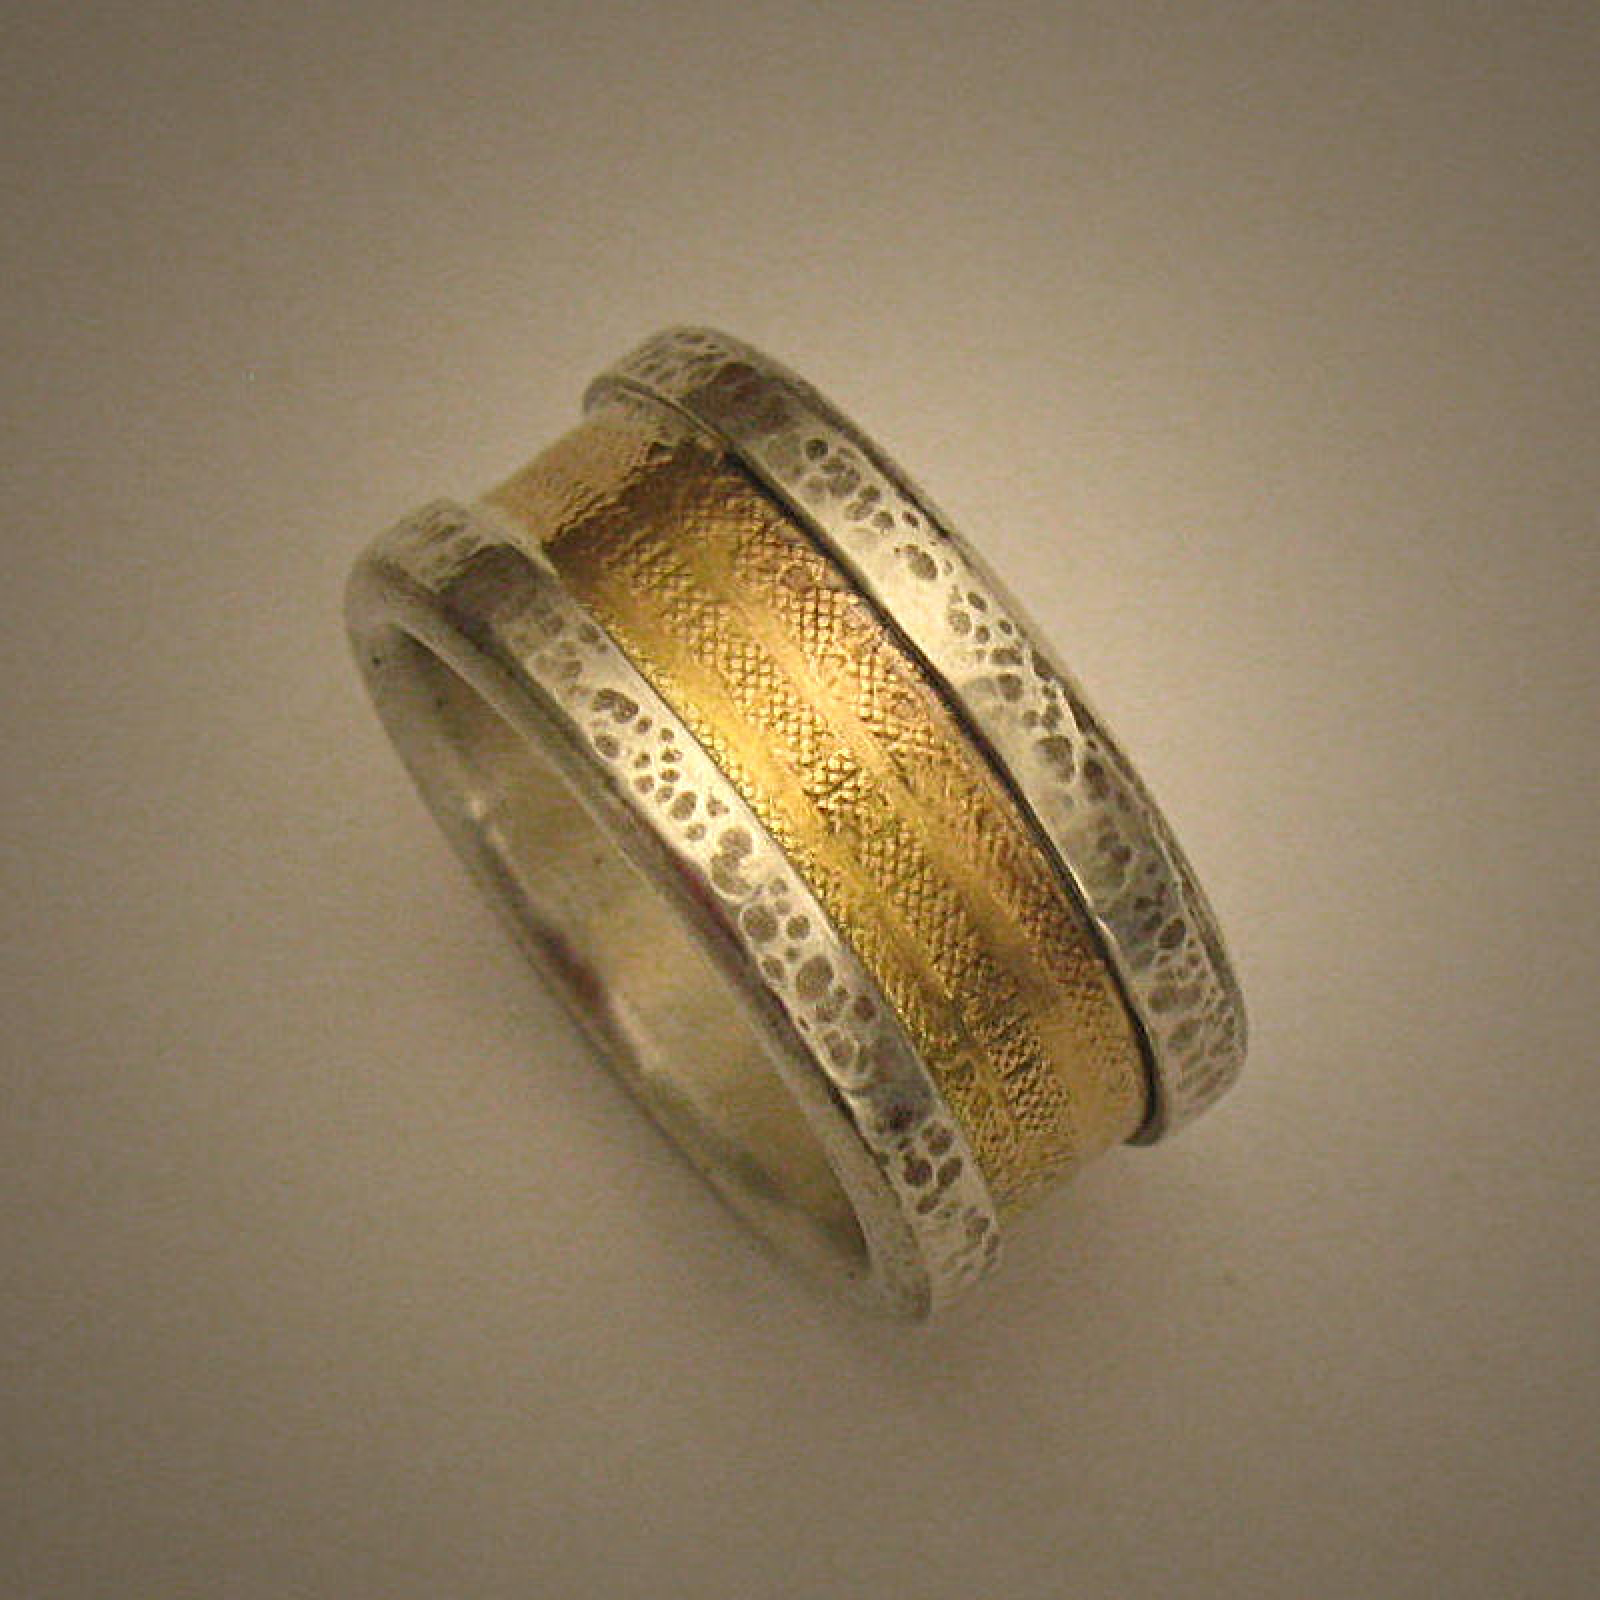 Kendal Rustic Hammered Wedding Rings – Cumbrian Designs